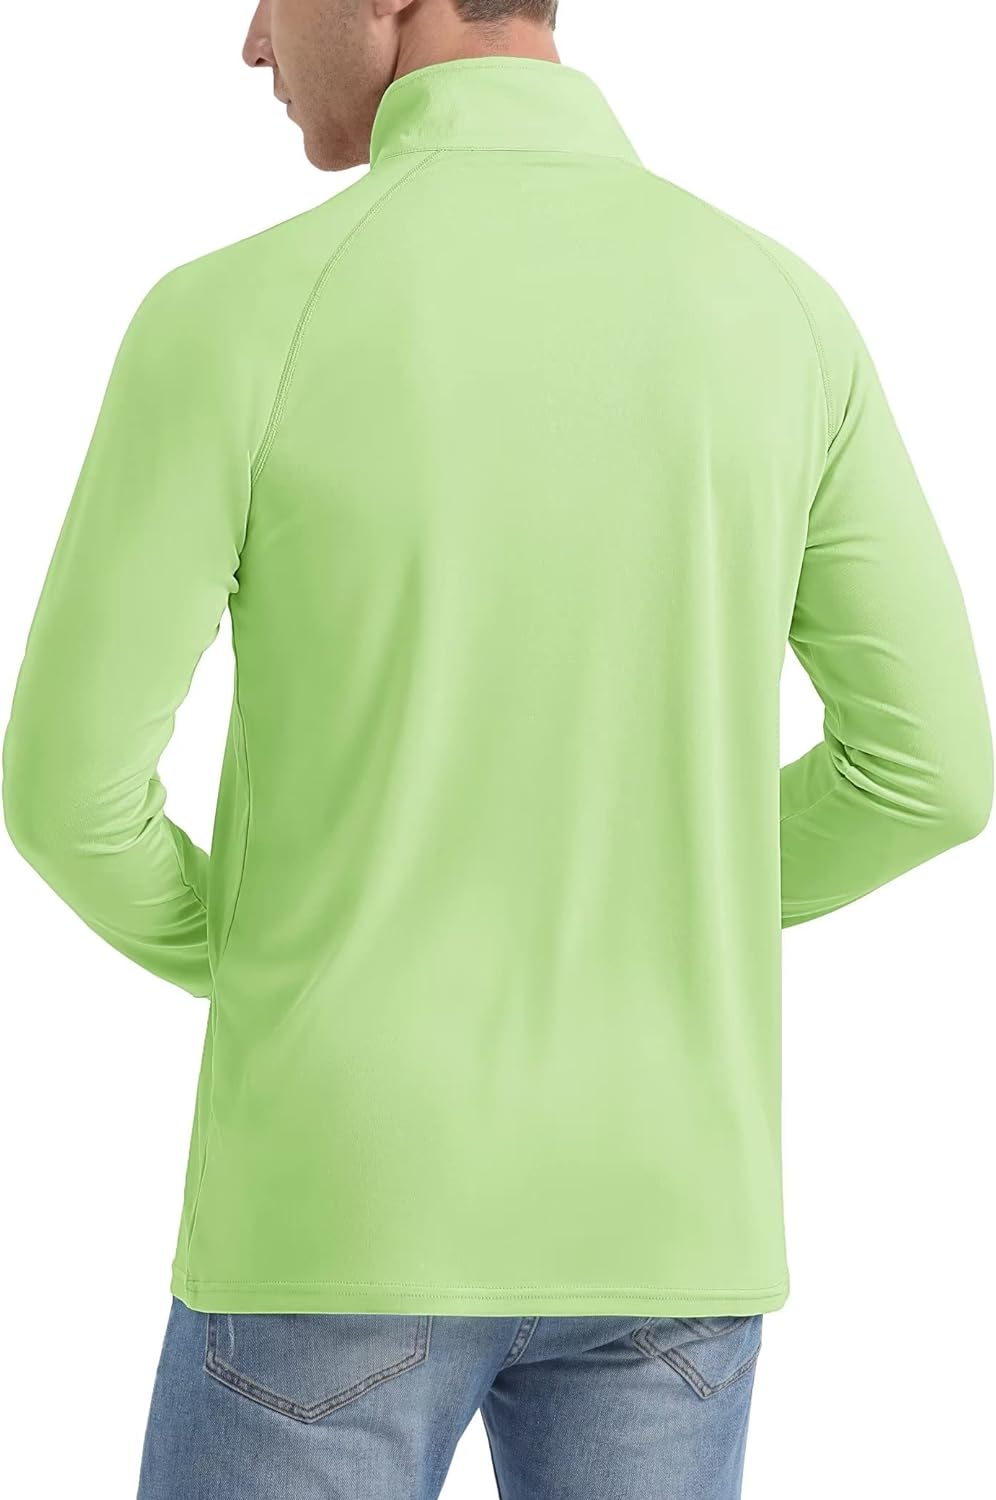 MAGCOMSEN Mens Long Sleeve Sun Shirts UPF 50+ Tees 1/4 Zip Up Fishing Running Rash Guard T-Shirts Outdoor Shirt